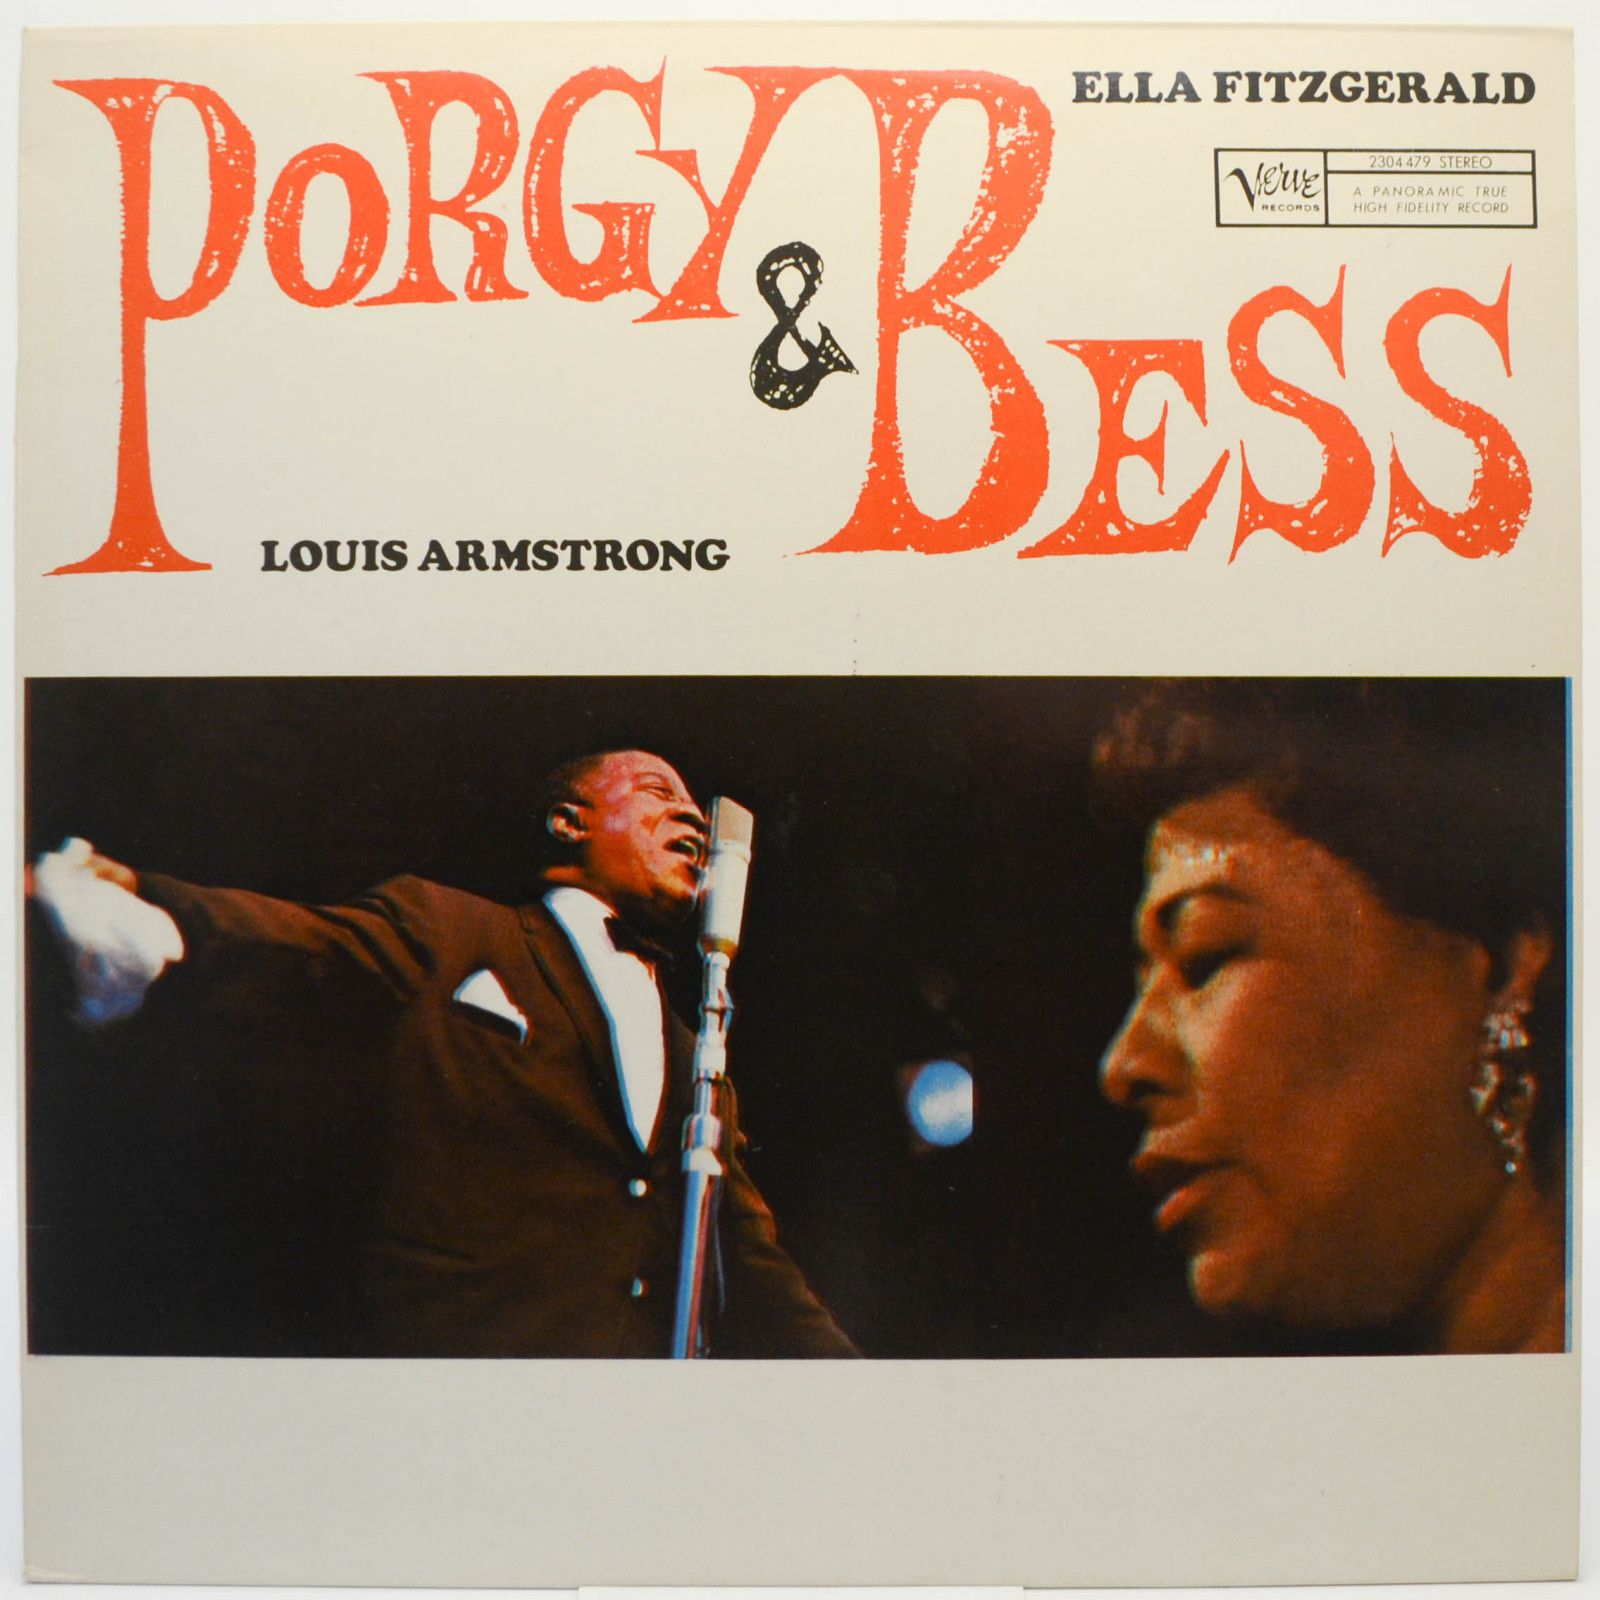 Ella Fitzgerald & Louis Armstrong — Porgy & Bess, 1959